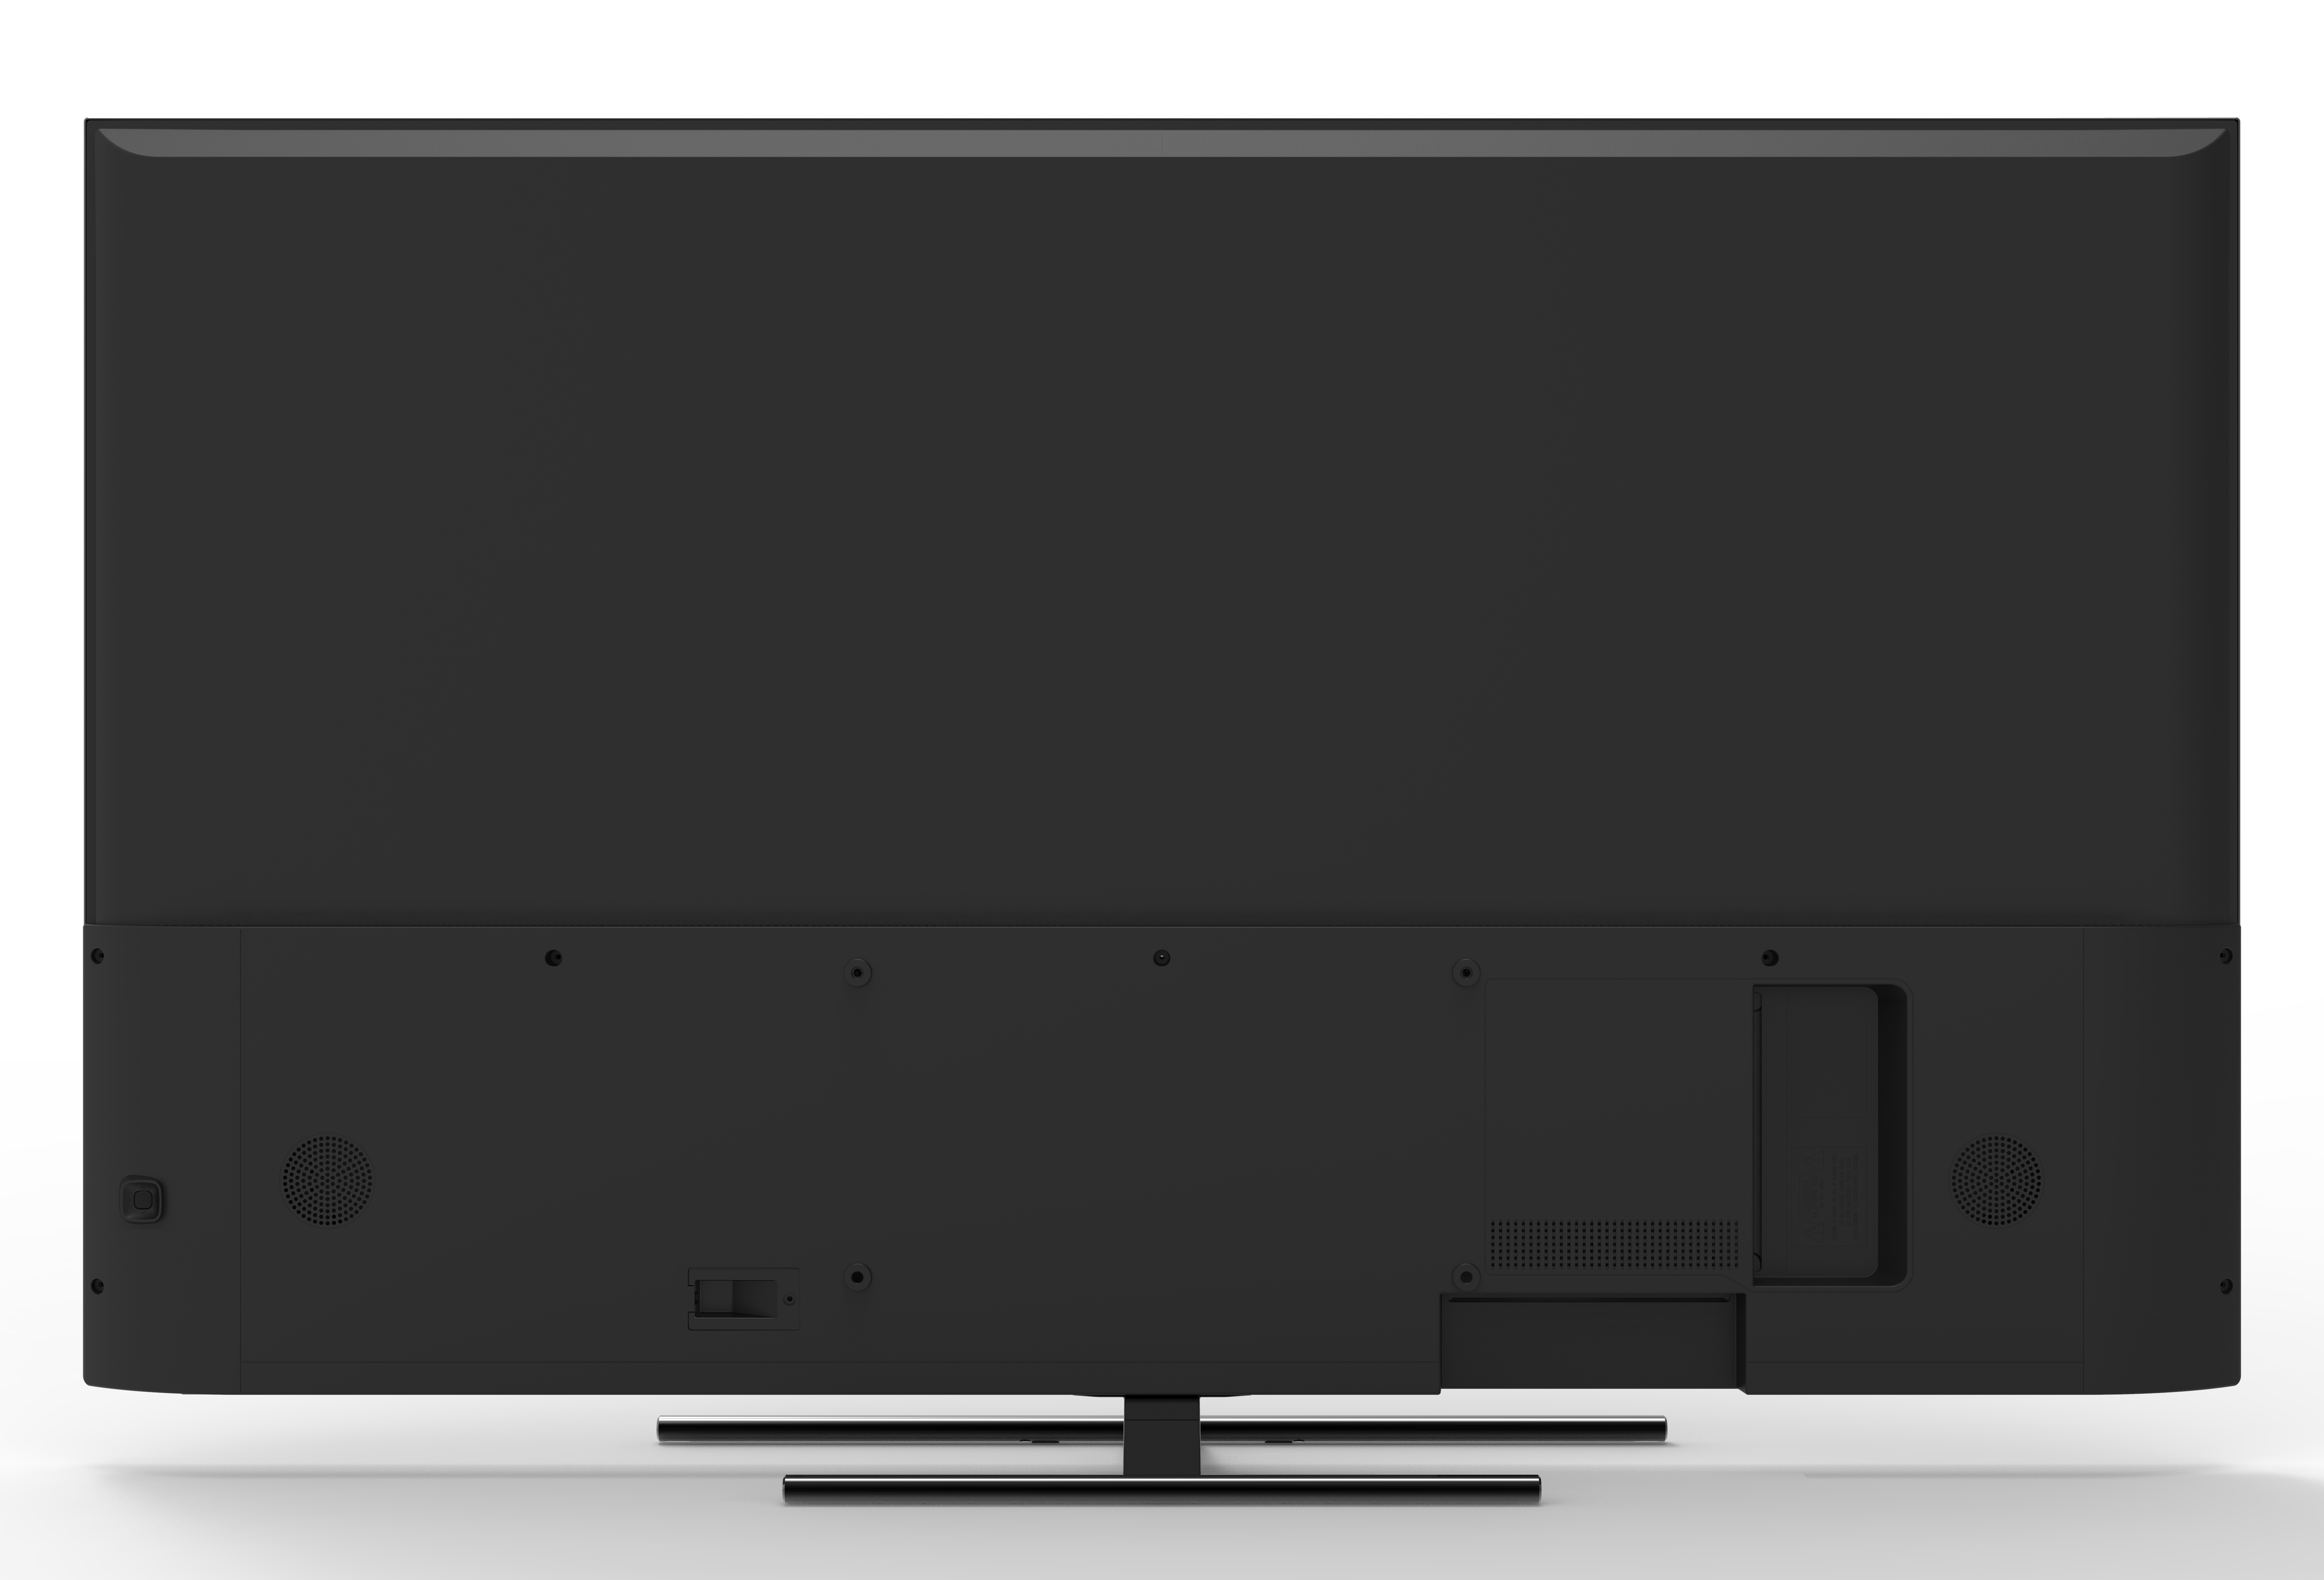 Телевизора haier 65 smart tv ax. Haier 55 Smart TV AX. Телевизор Haier 55 Smart TV AX Pro. Haier 65 Smart TV BX. Haier 65 Smart TV AX Pro.